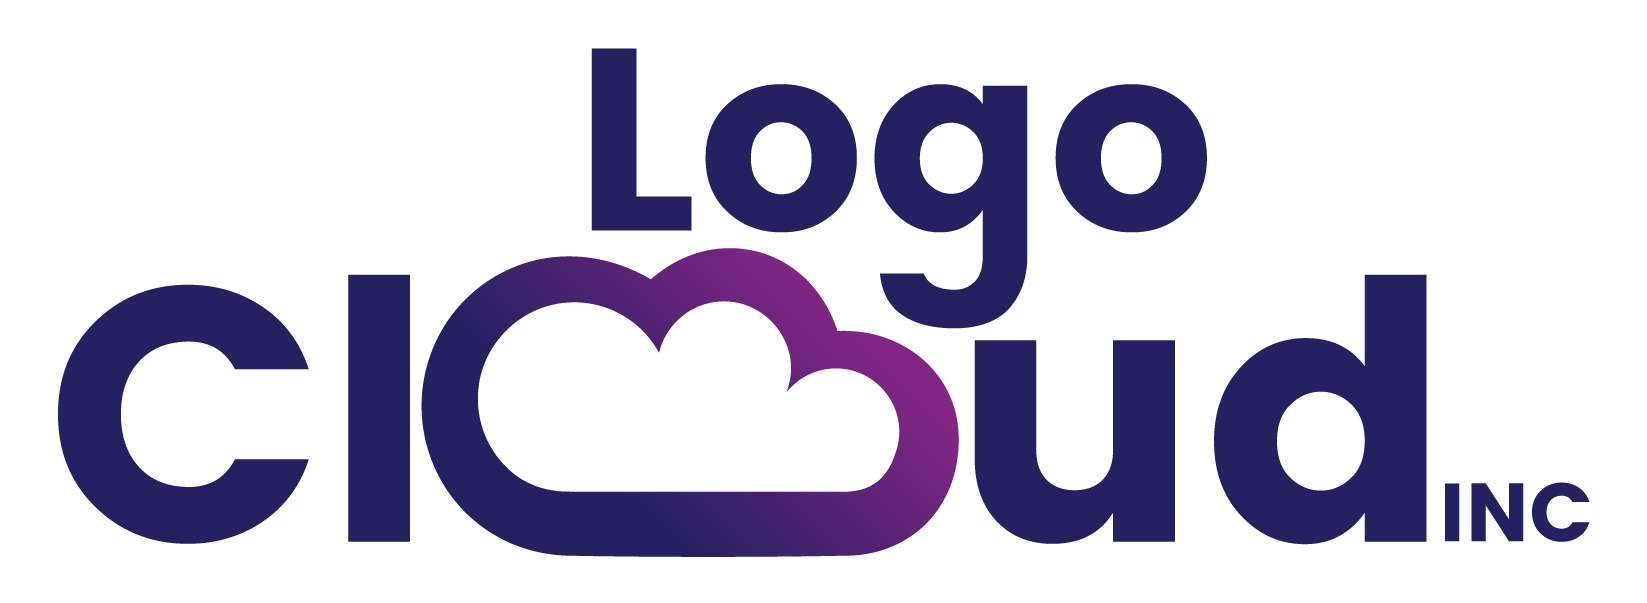 Logo Cloud Inc